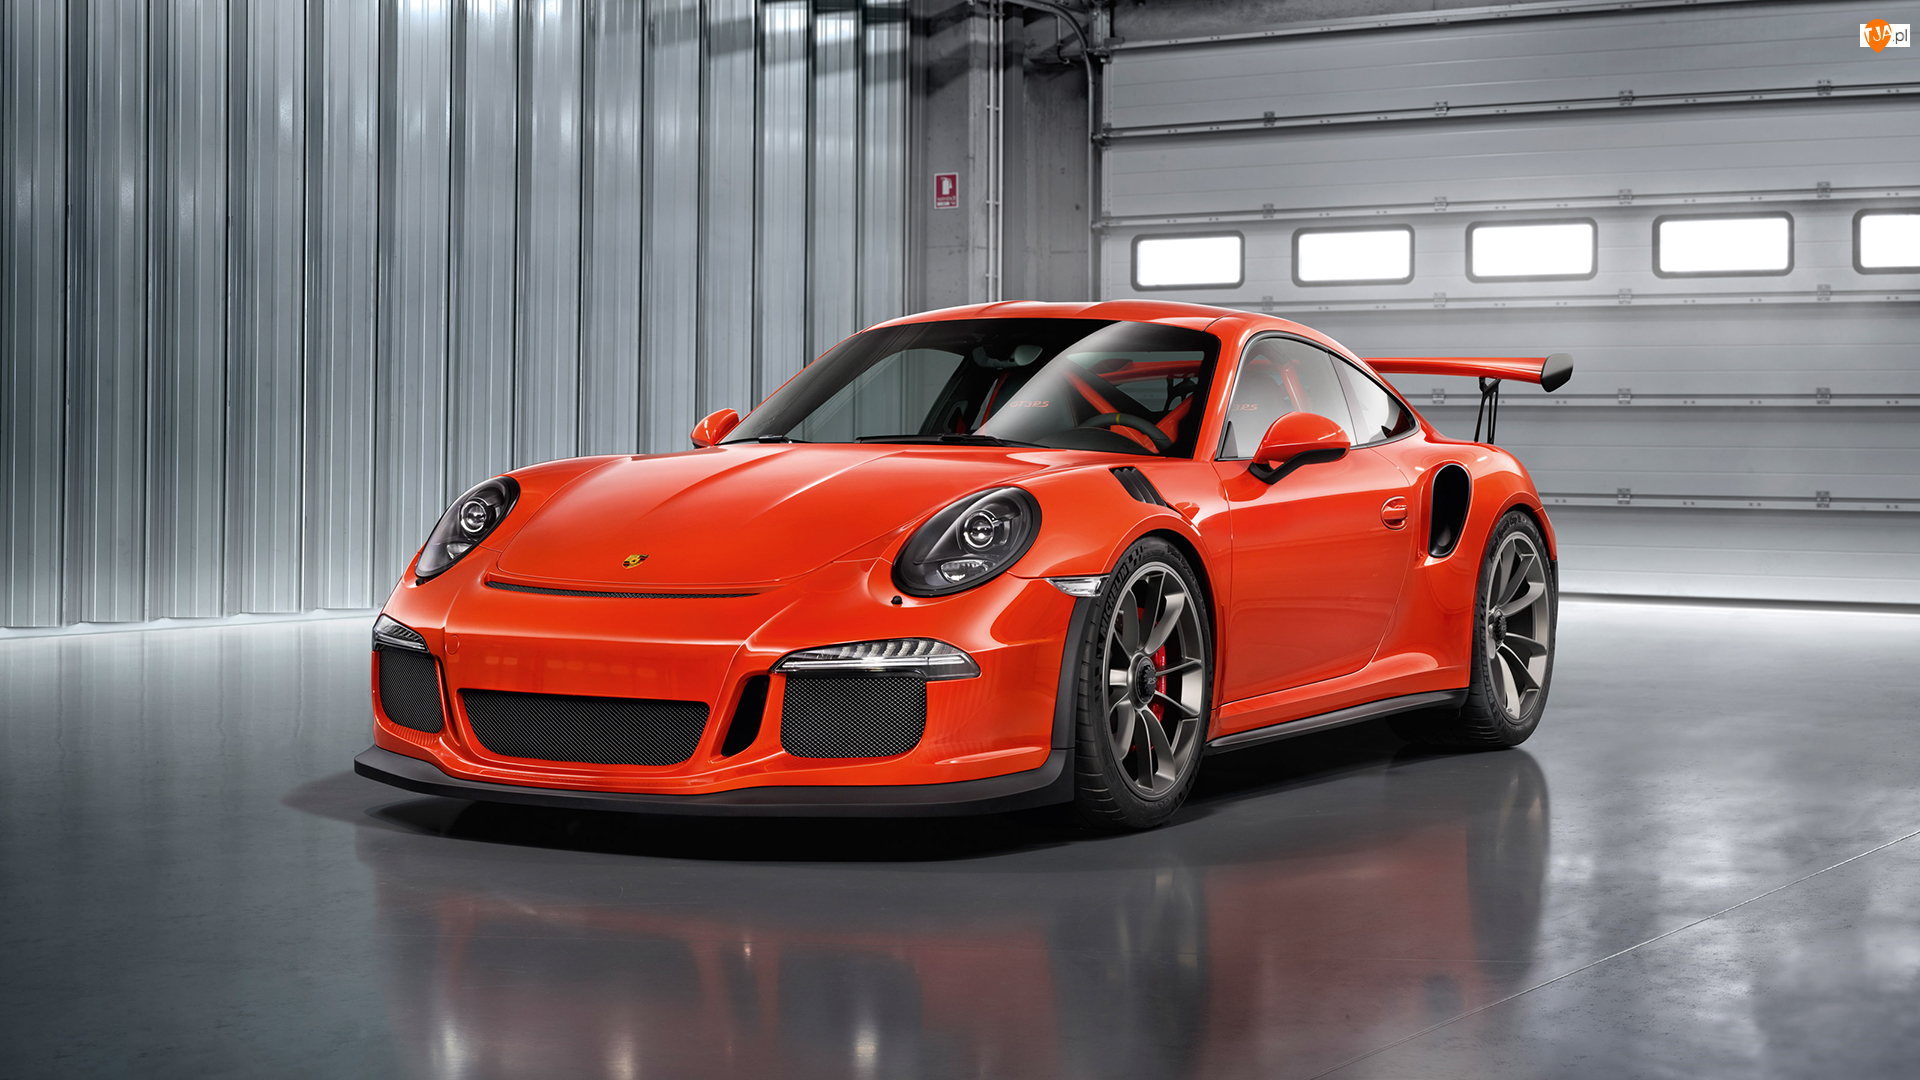 Samochód Porsche 911 GT3 w garażu